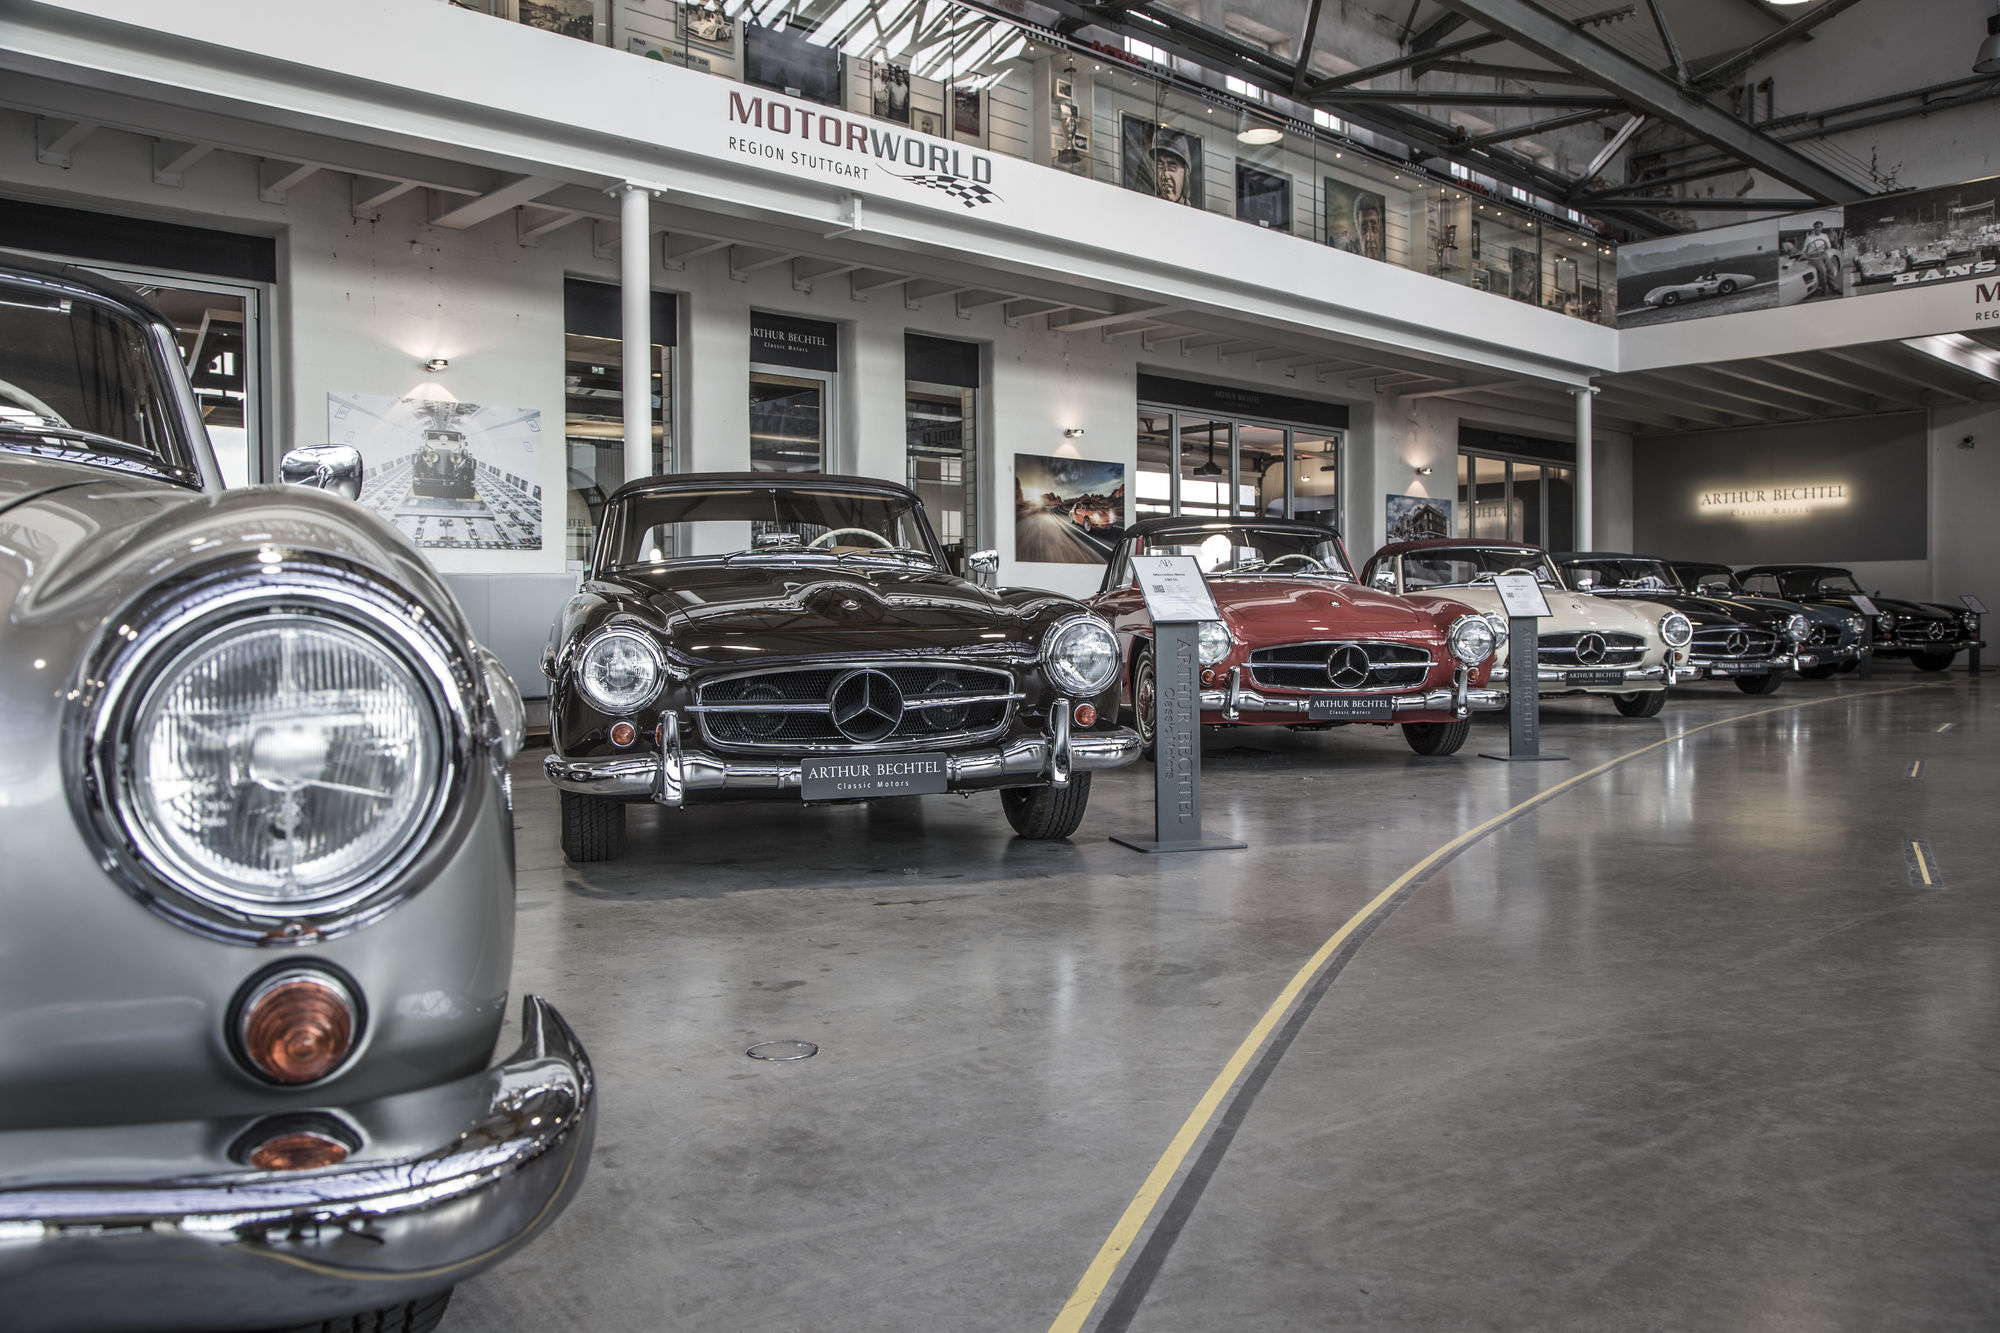 Arthur Bechtel Classic Motors in der Motorworld